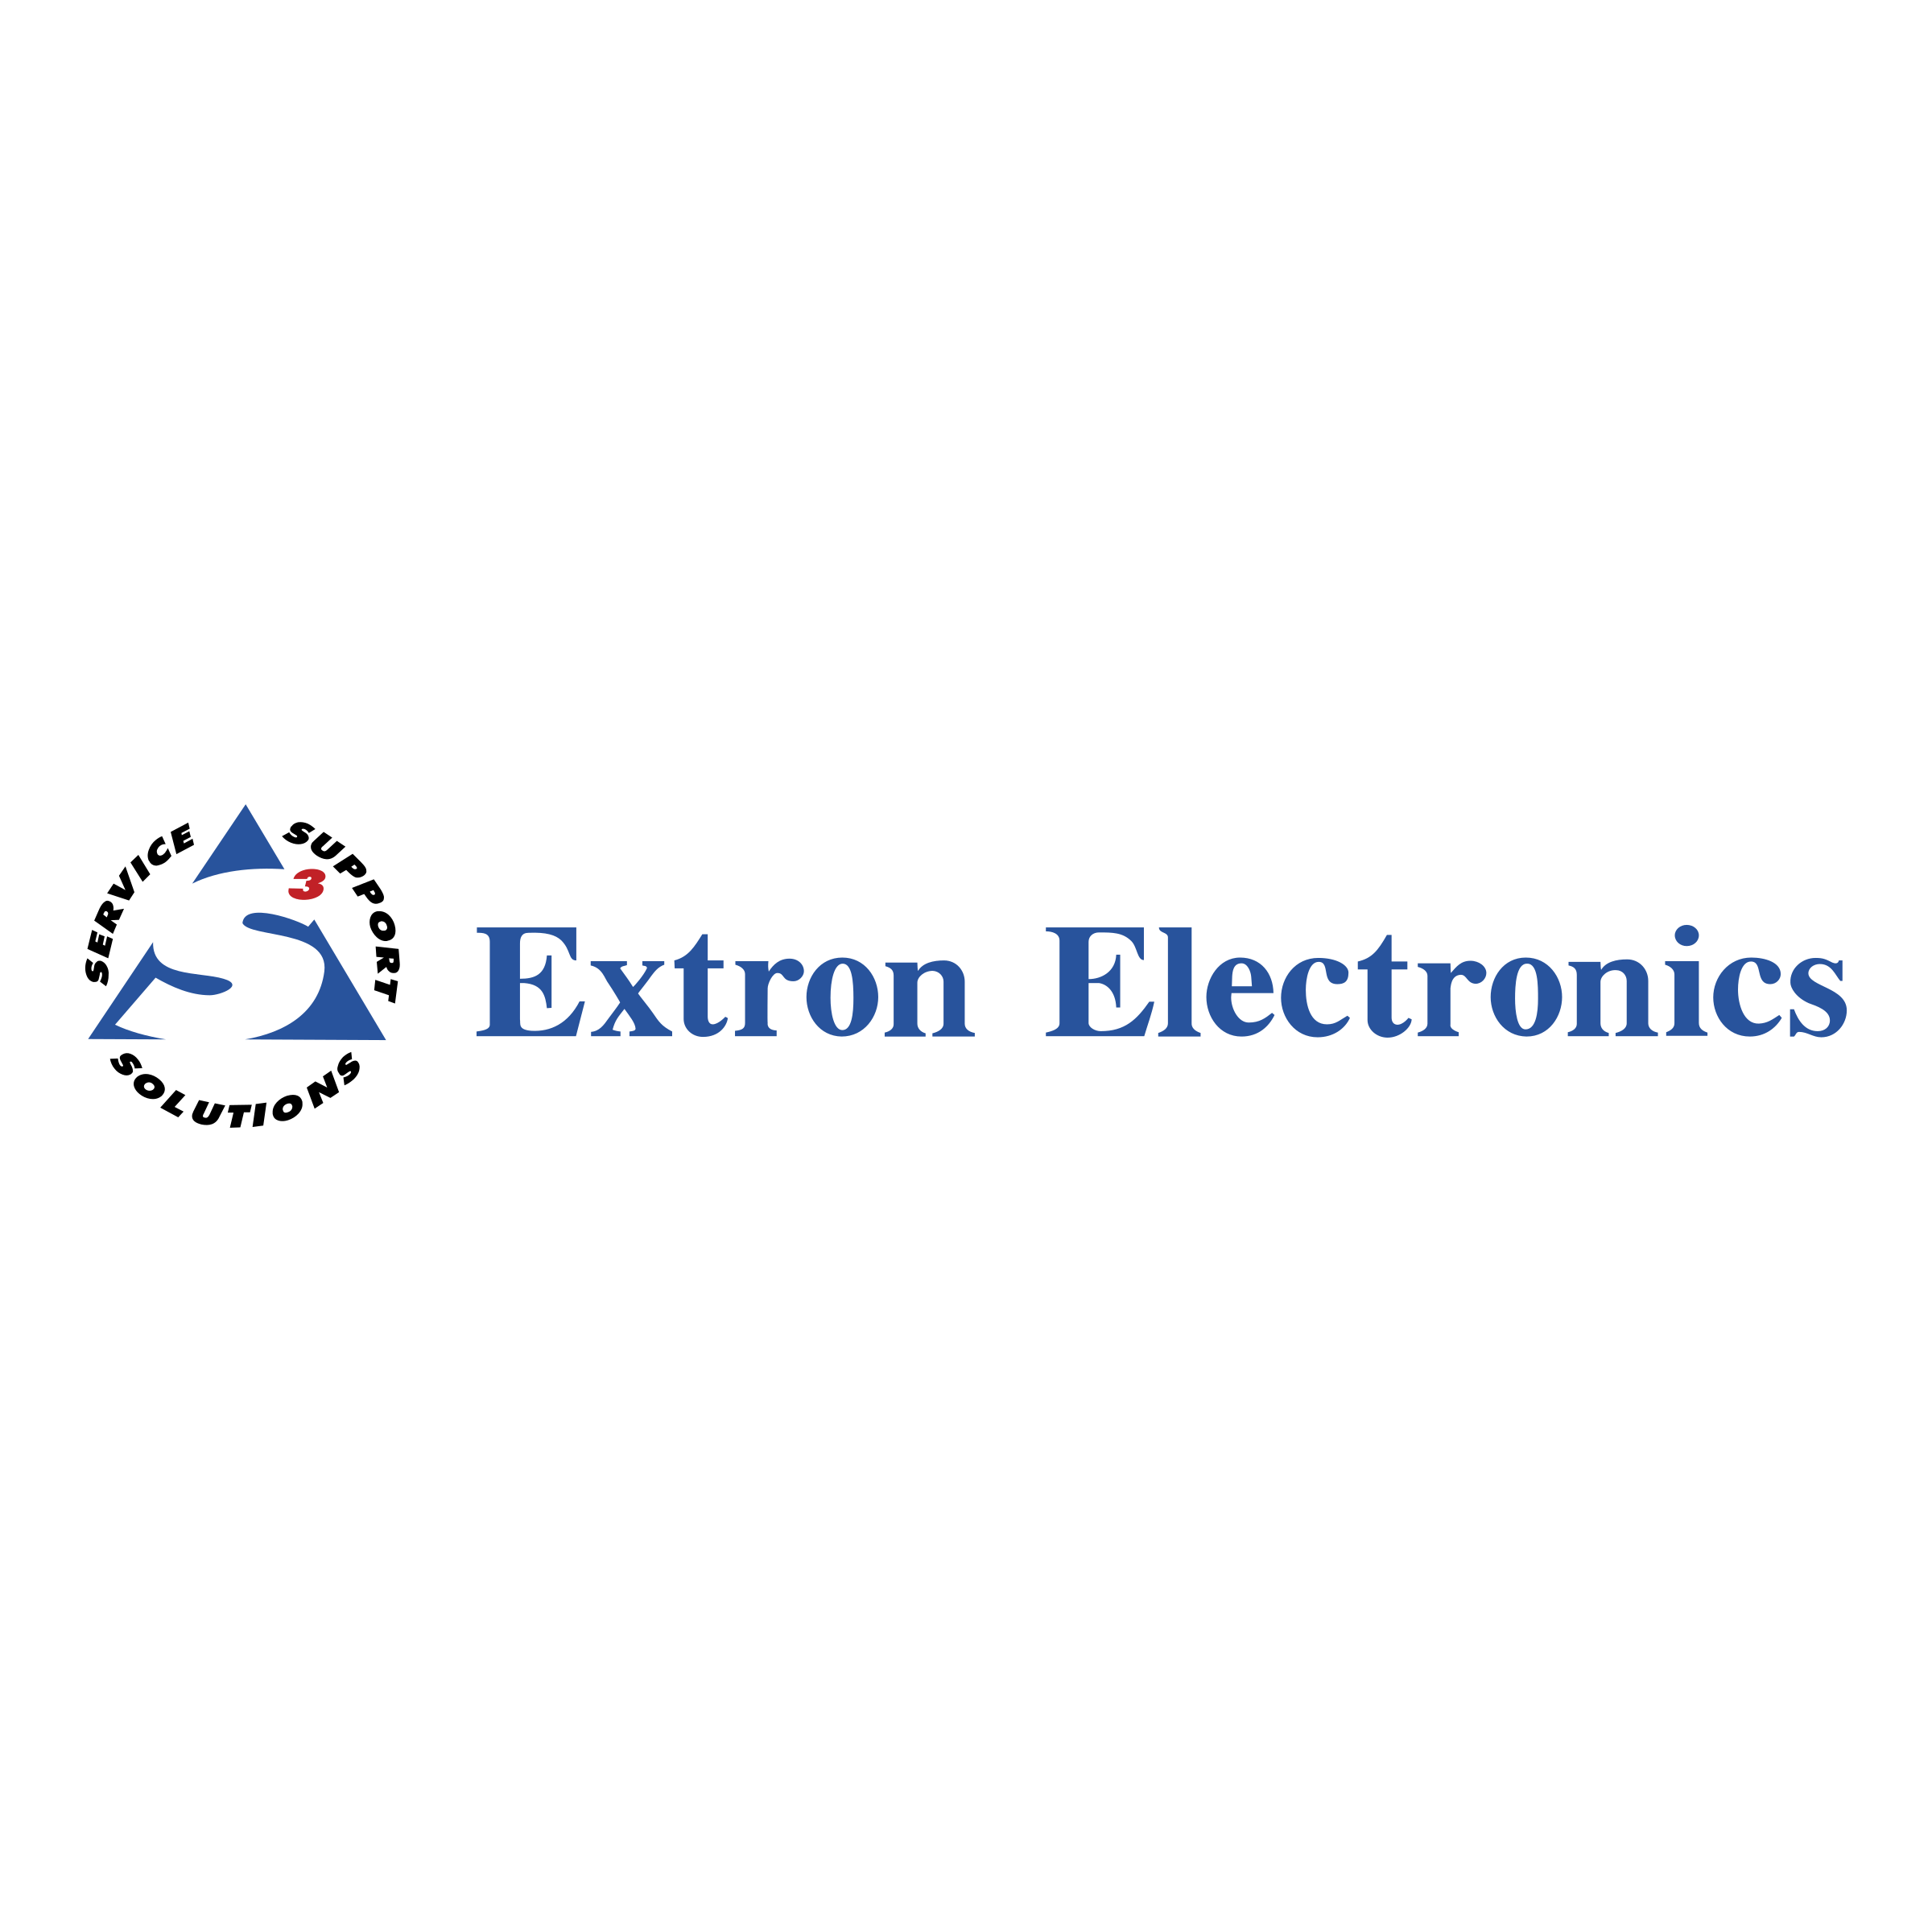 Extron Logo - Extron Electronics Logo PNG Transparent & SVG Vector - Freebie Supply